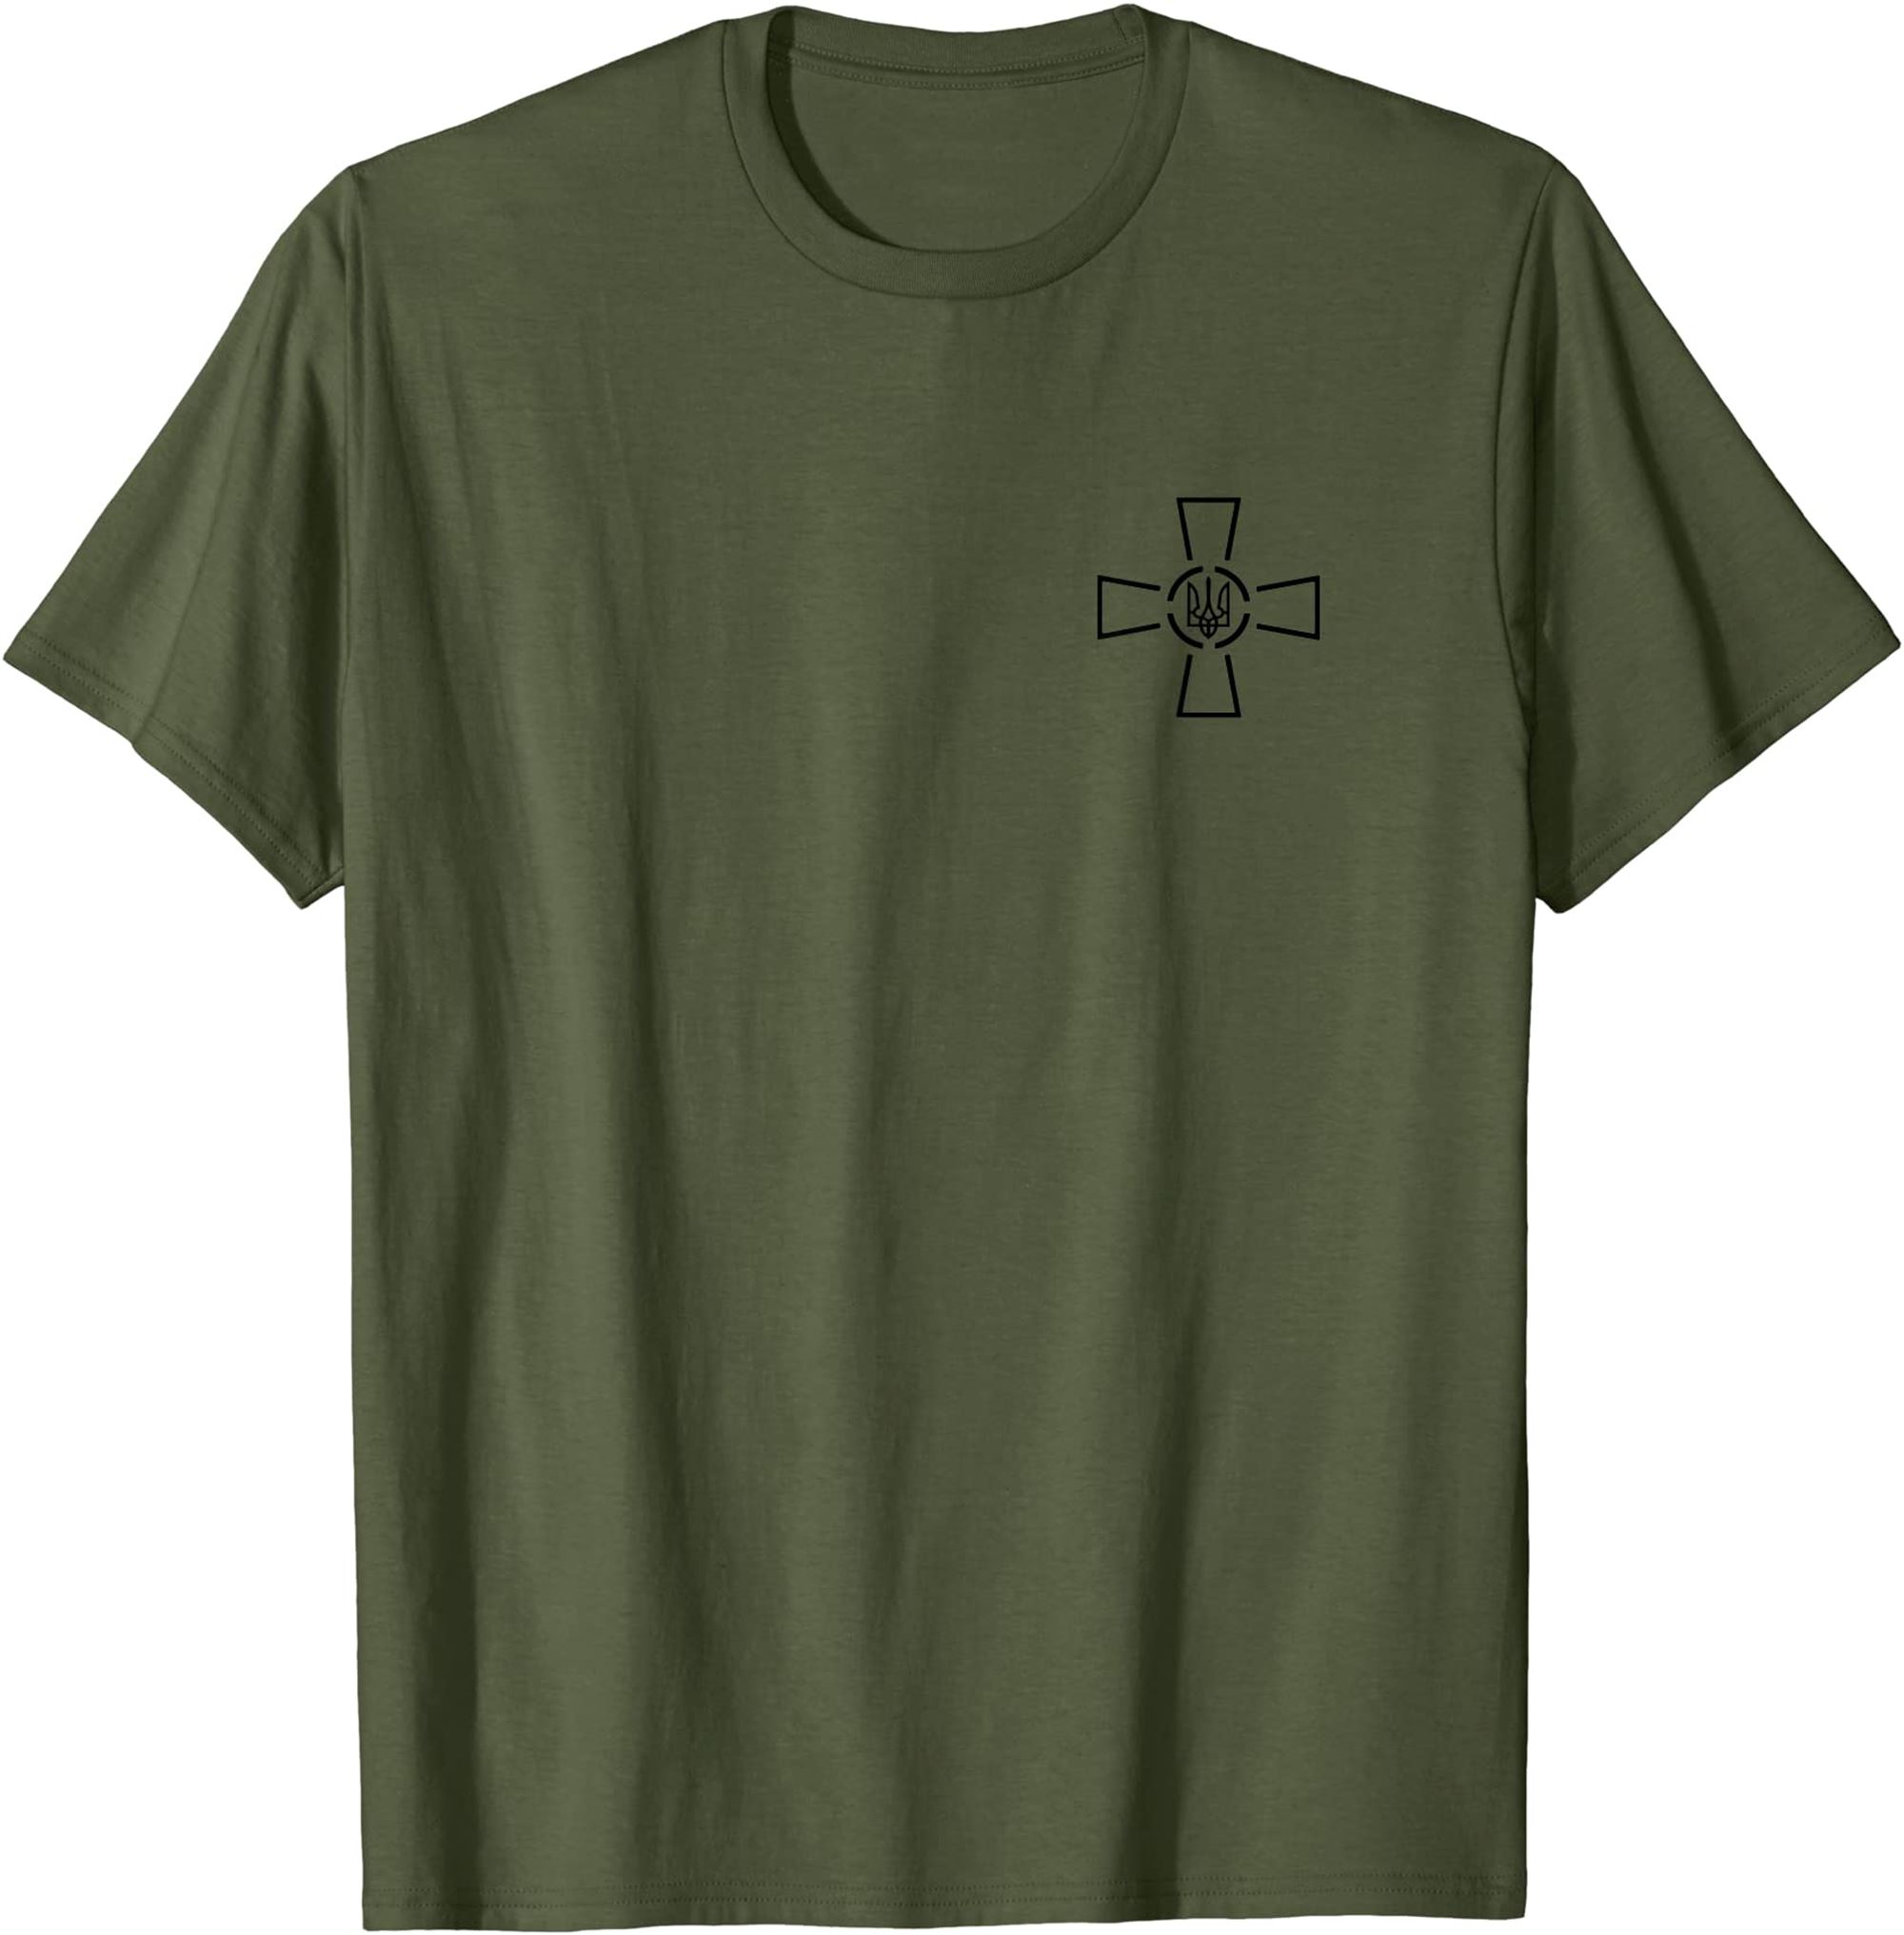 Ato Cross Tryzub Ukraine Volodymyr Zelensky Green T-shirt Full Size Up To 5xl